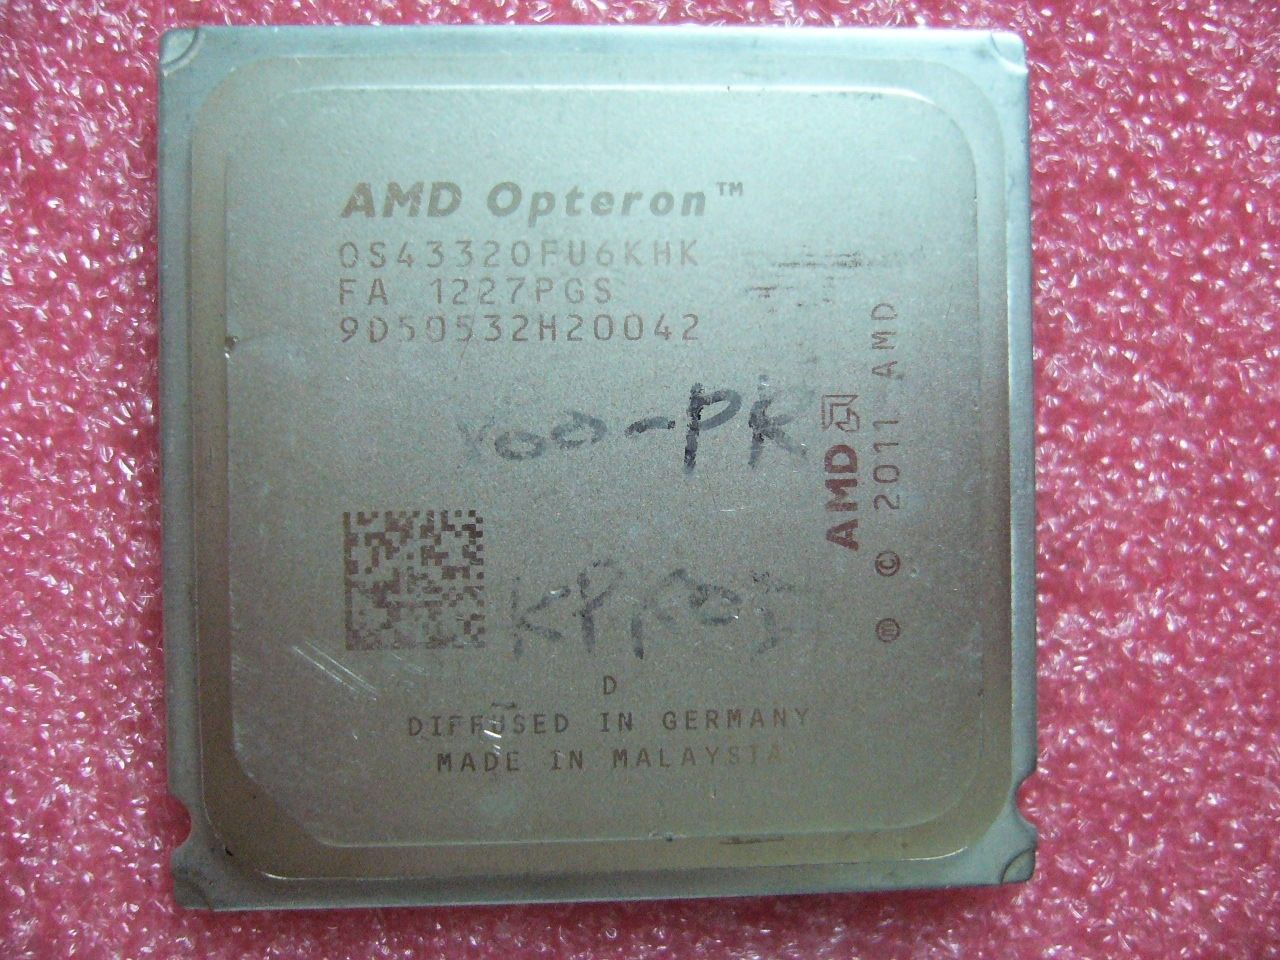 QTY 1x AMD Opteron 4332 HE 3 GHz Six Core (OS4332OFU6KHK) CPU Socket C32 - Click Image to Close